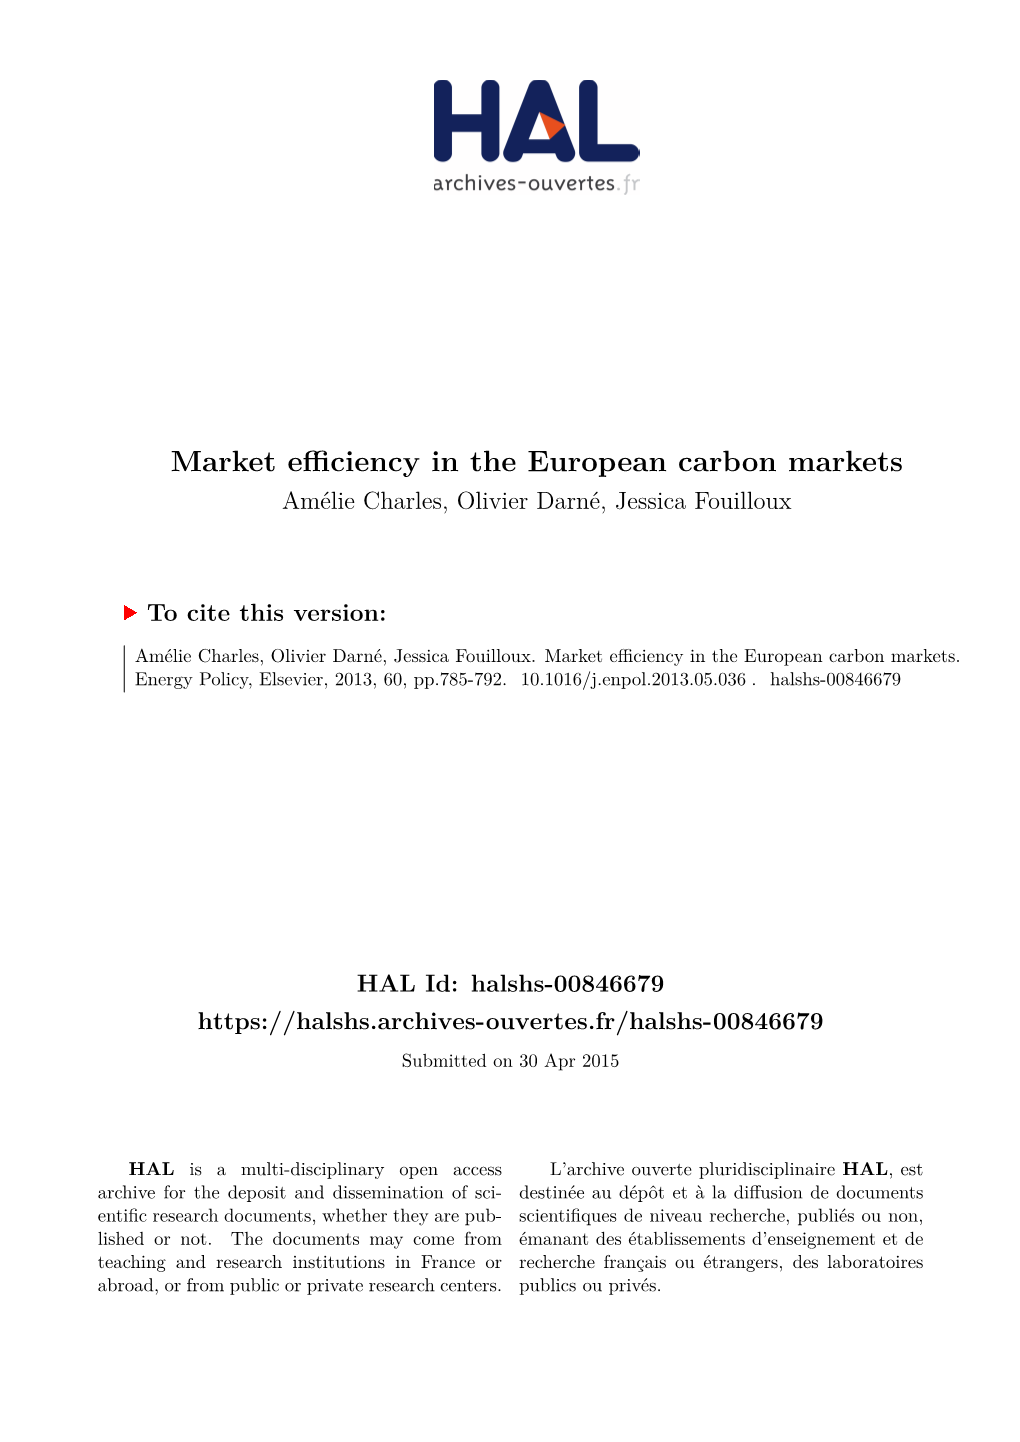 Market Efficiency in the European Carbon Markets